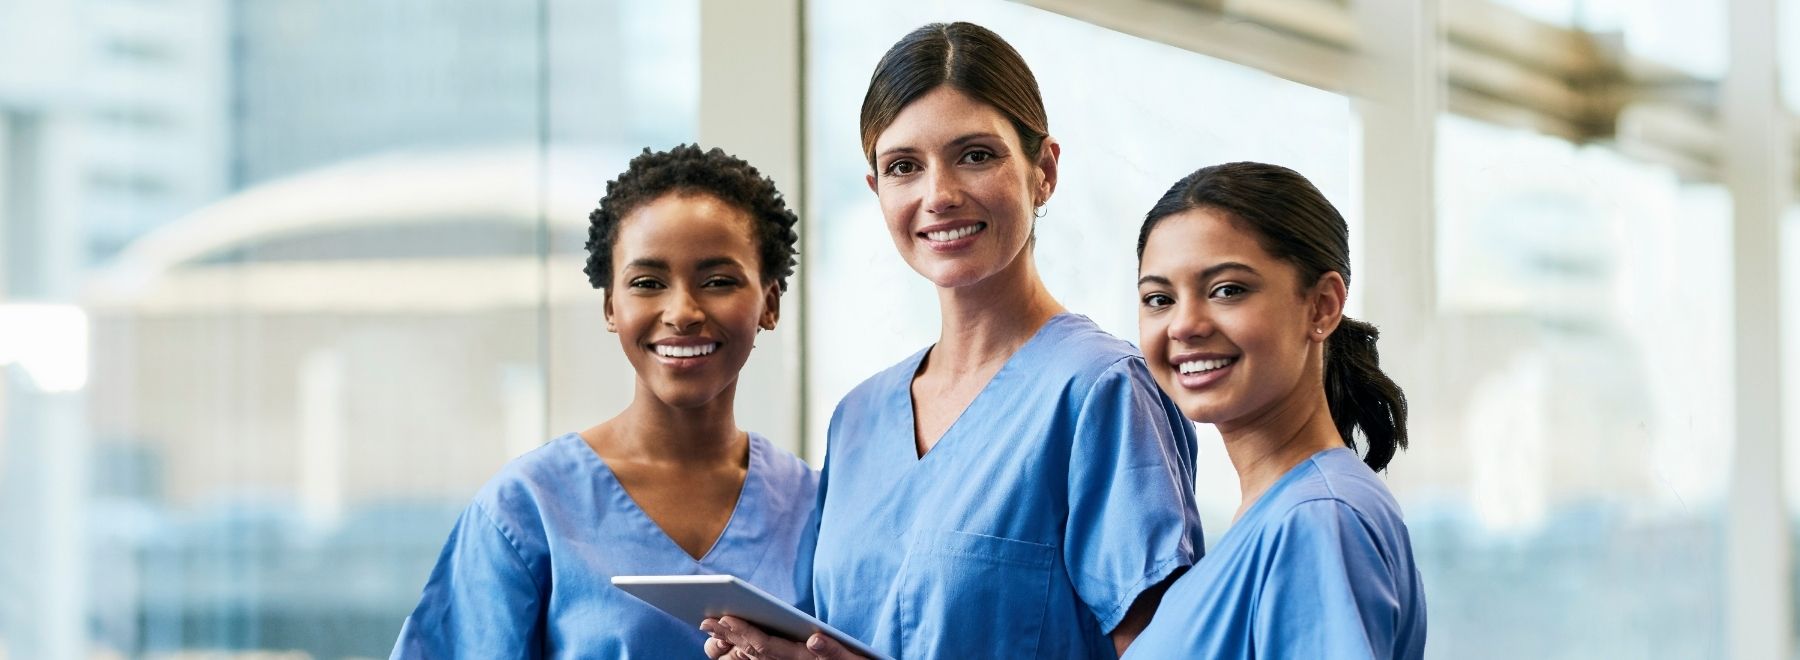 Three smiling female nurses